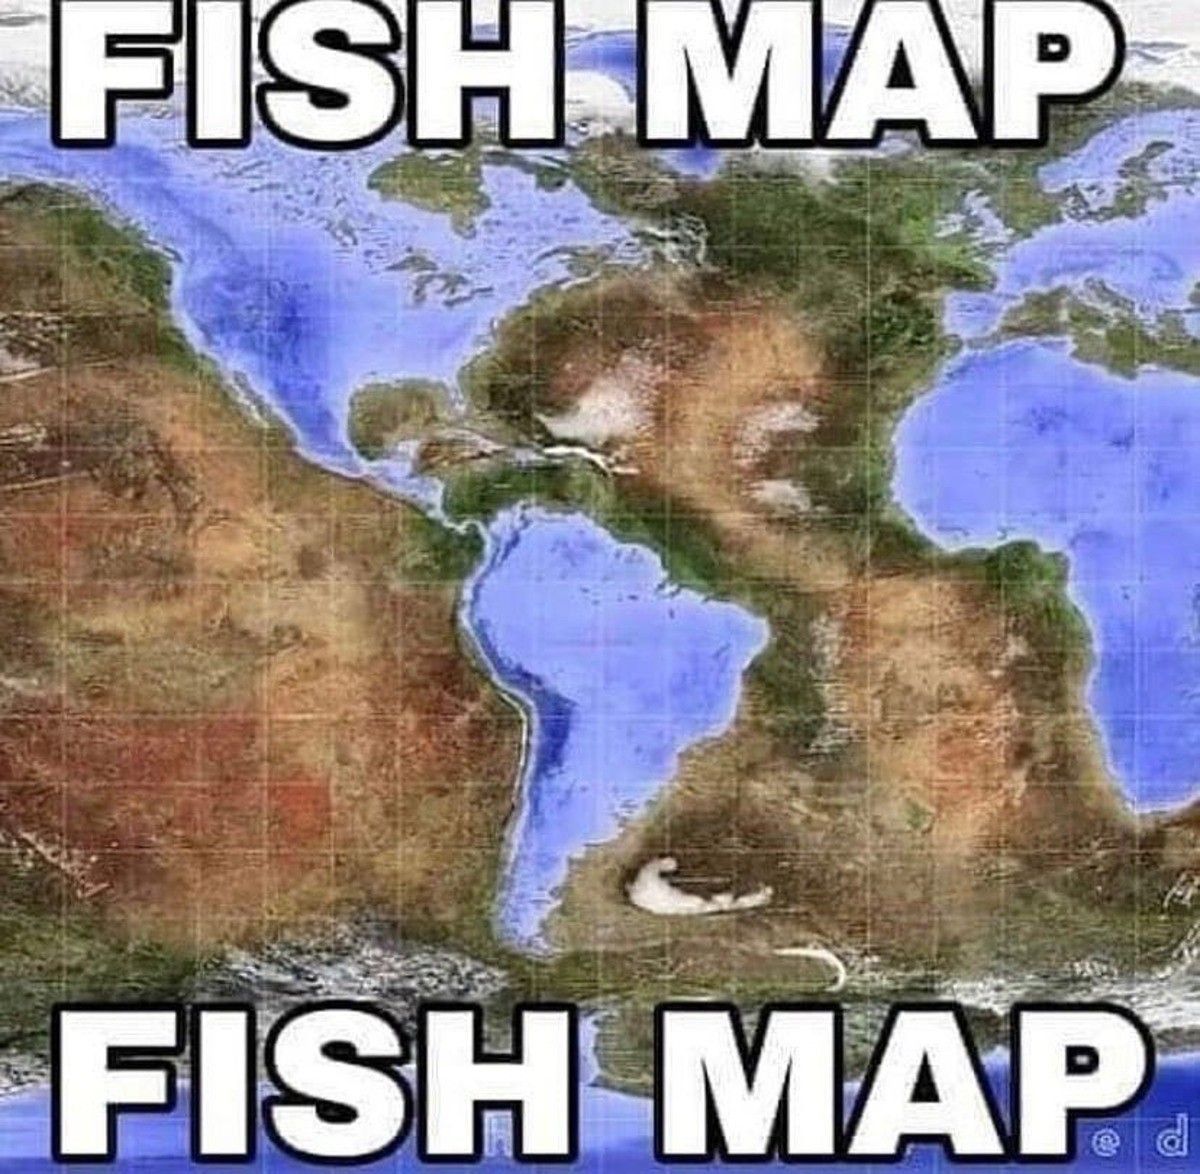 FISH MAP